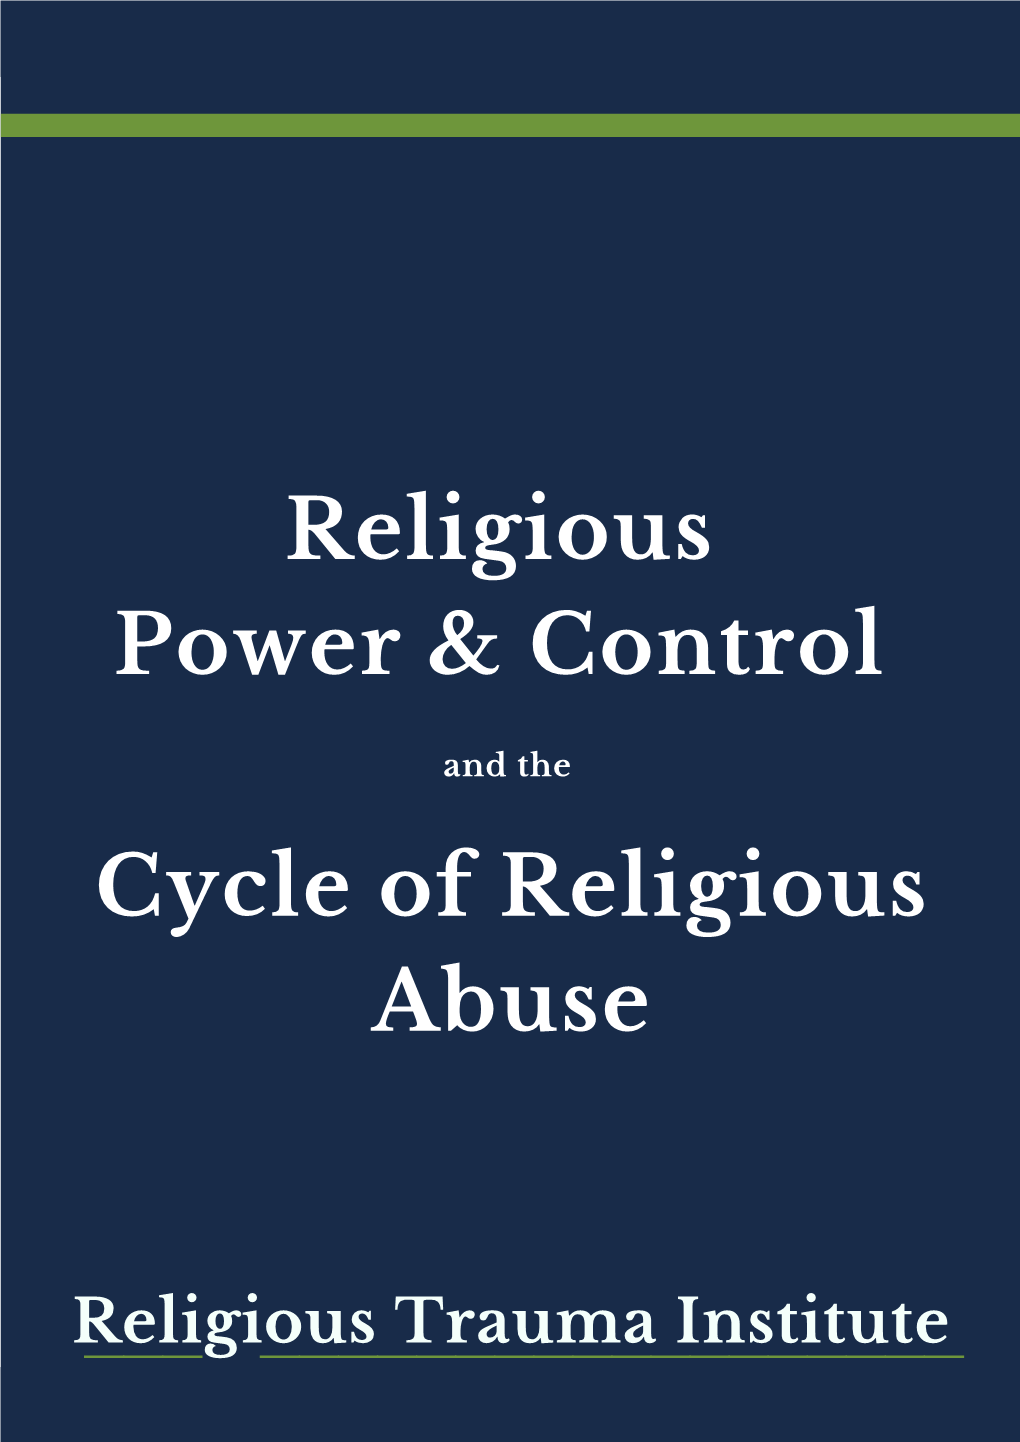 Religious Power & Control Cycle of Religious Abuse